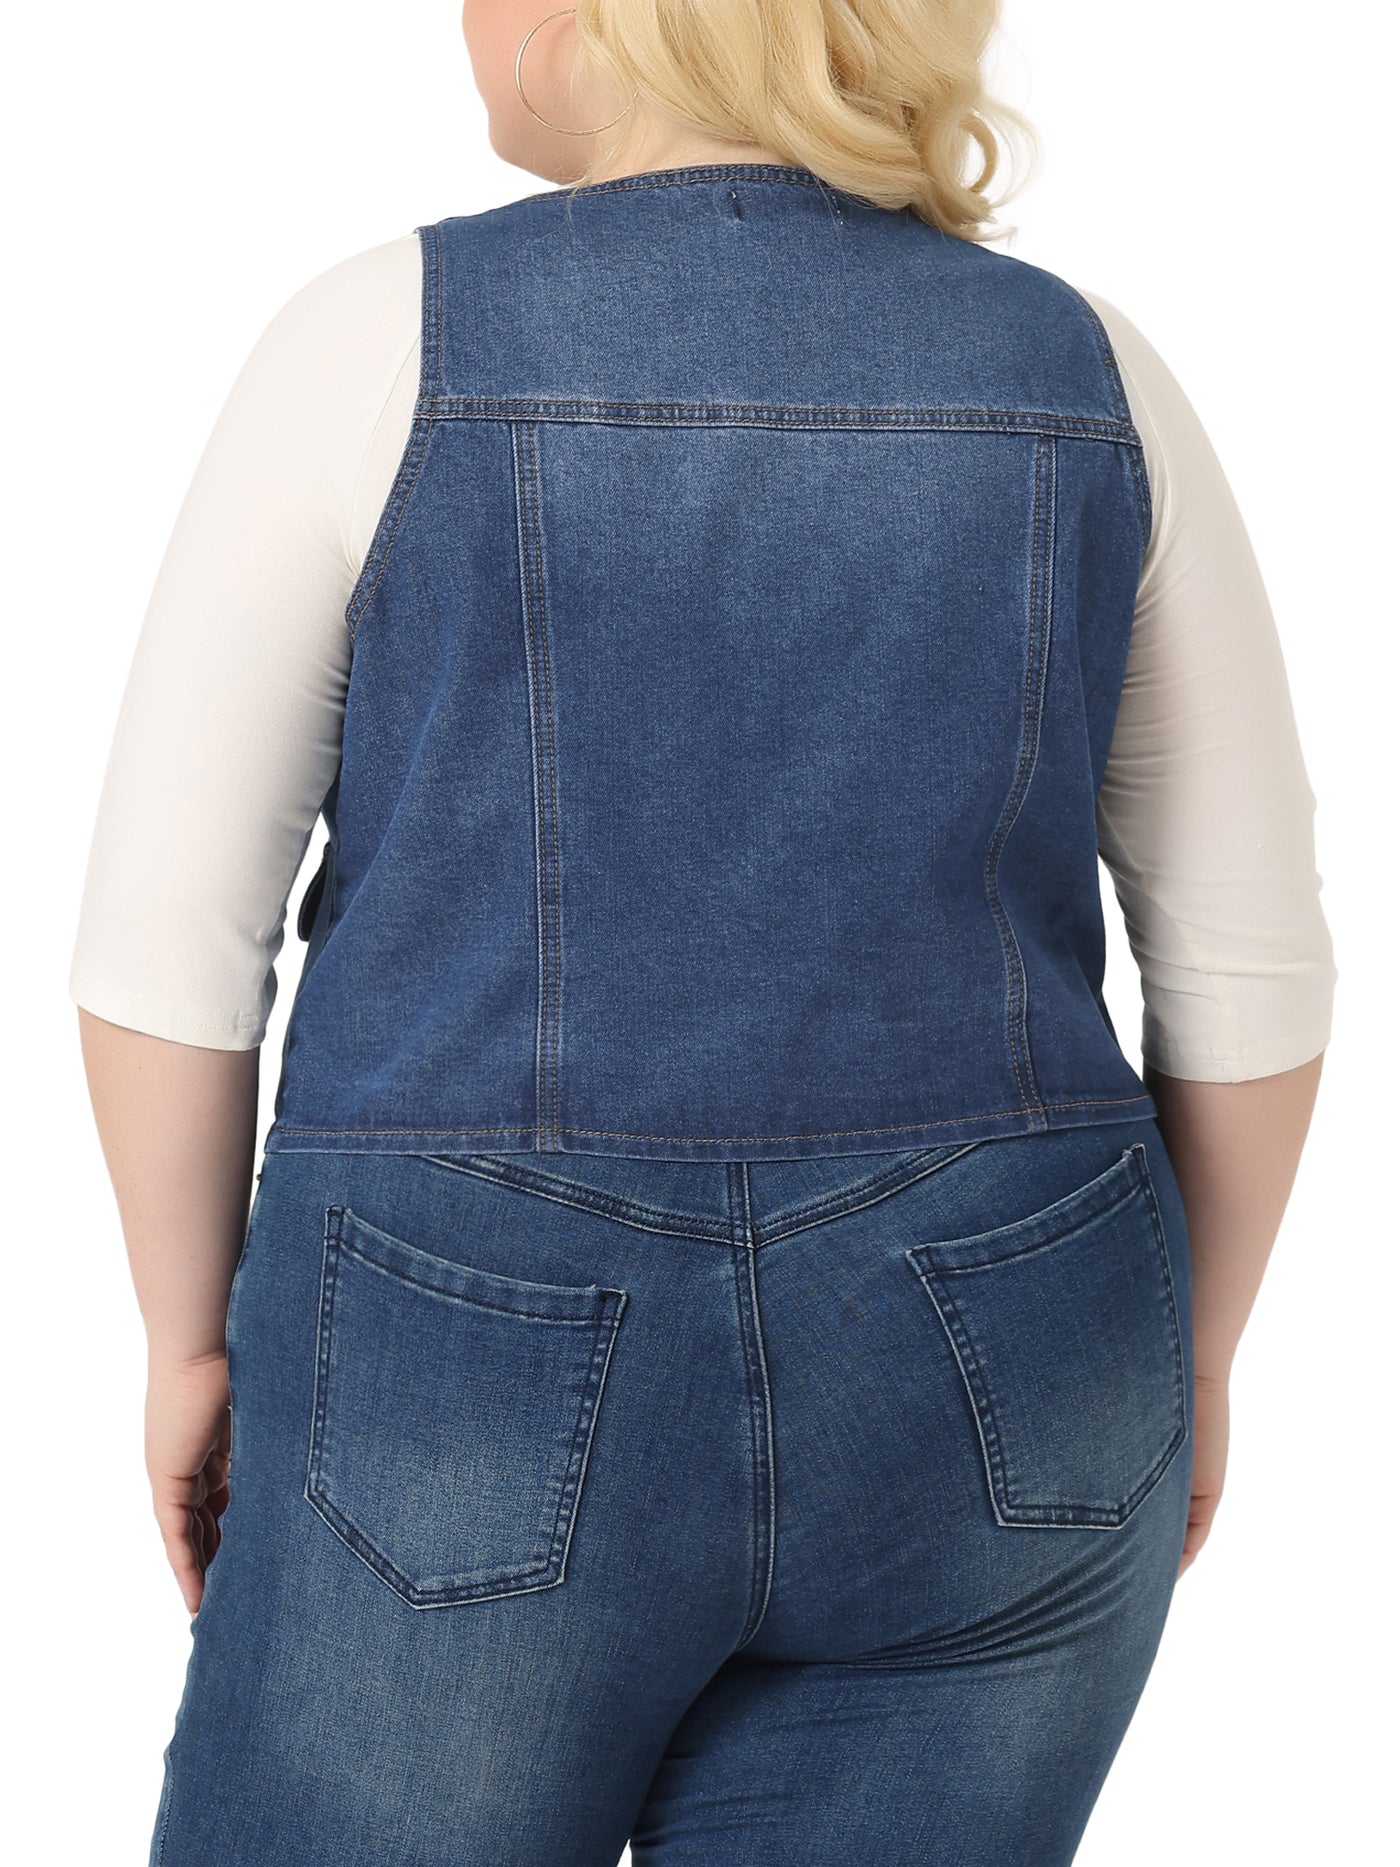 Bublédon Plus Size Denim Jackets for Women Sleeveless Lightweight Button Jean Crop Waistcoat Vests